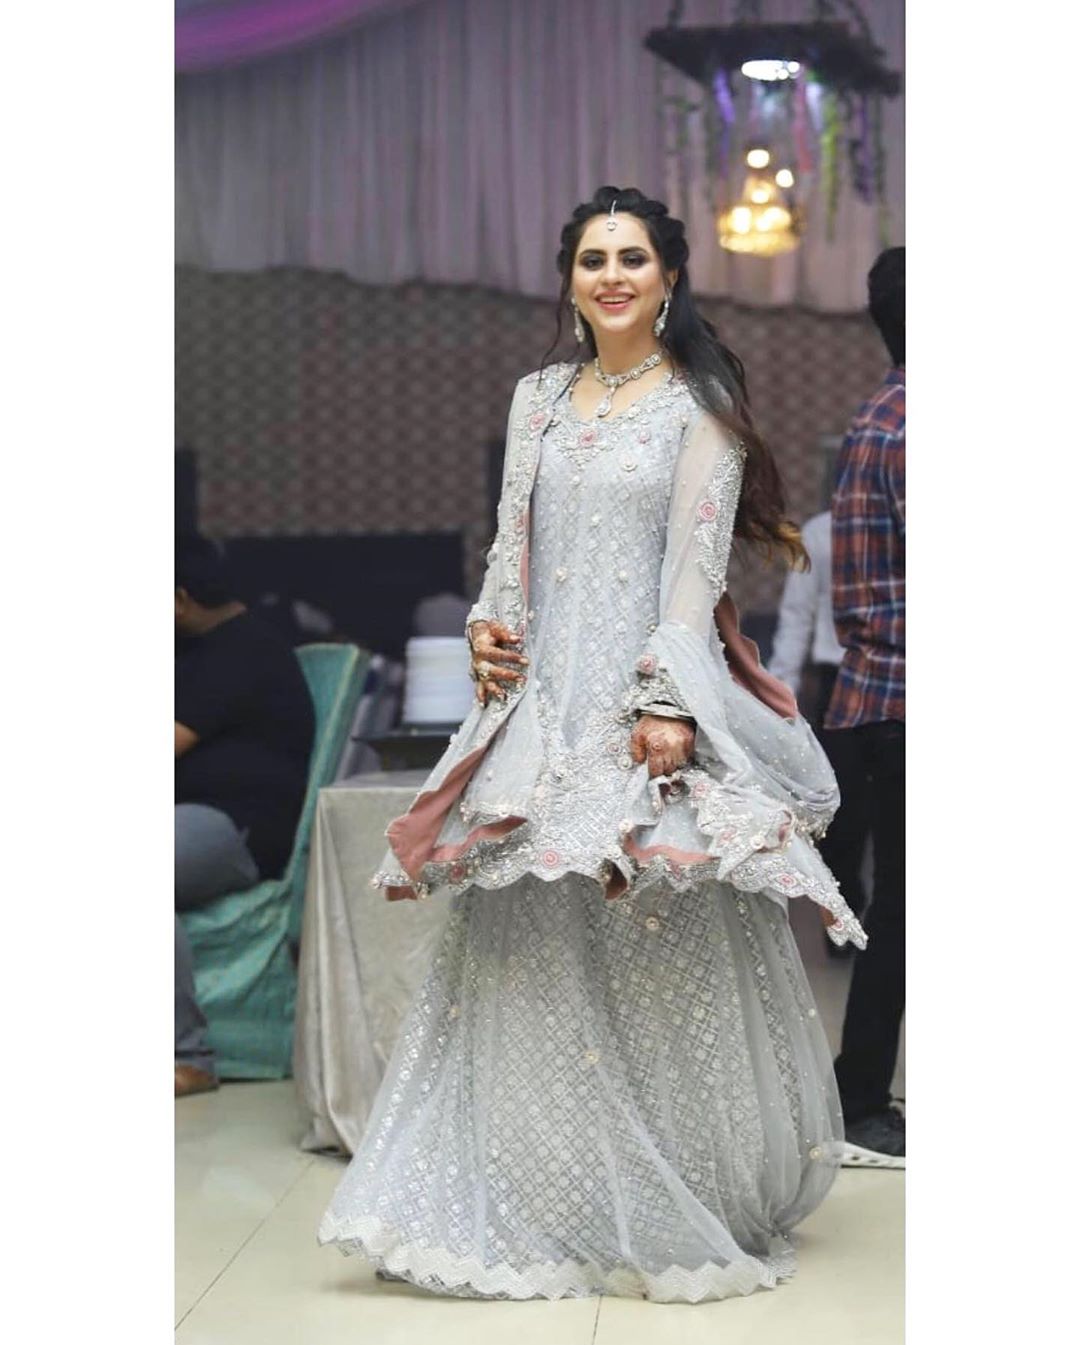 Arsalan Kanwar with Wife Fatima Effendi Beautiful Clicks From A Wedding Event